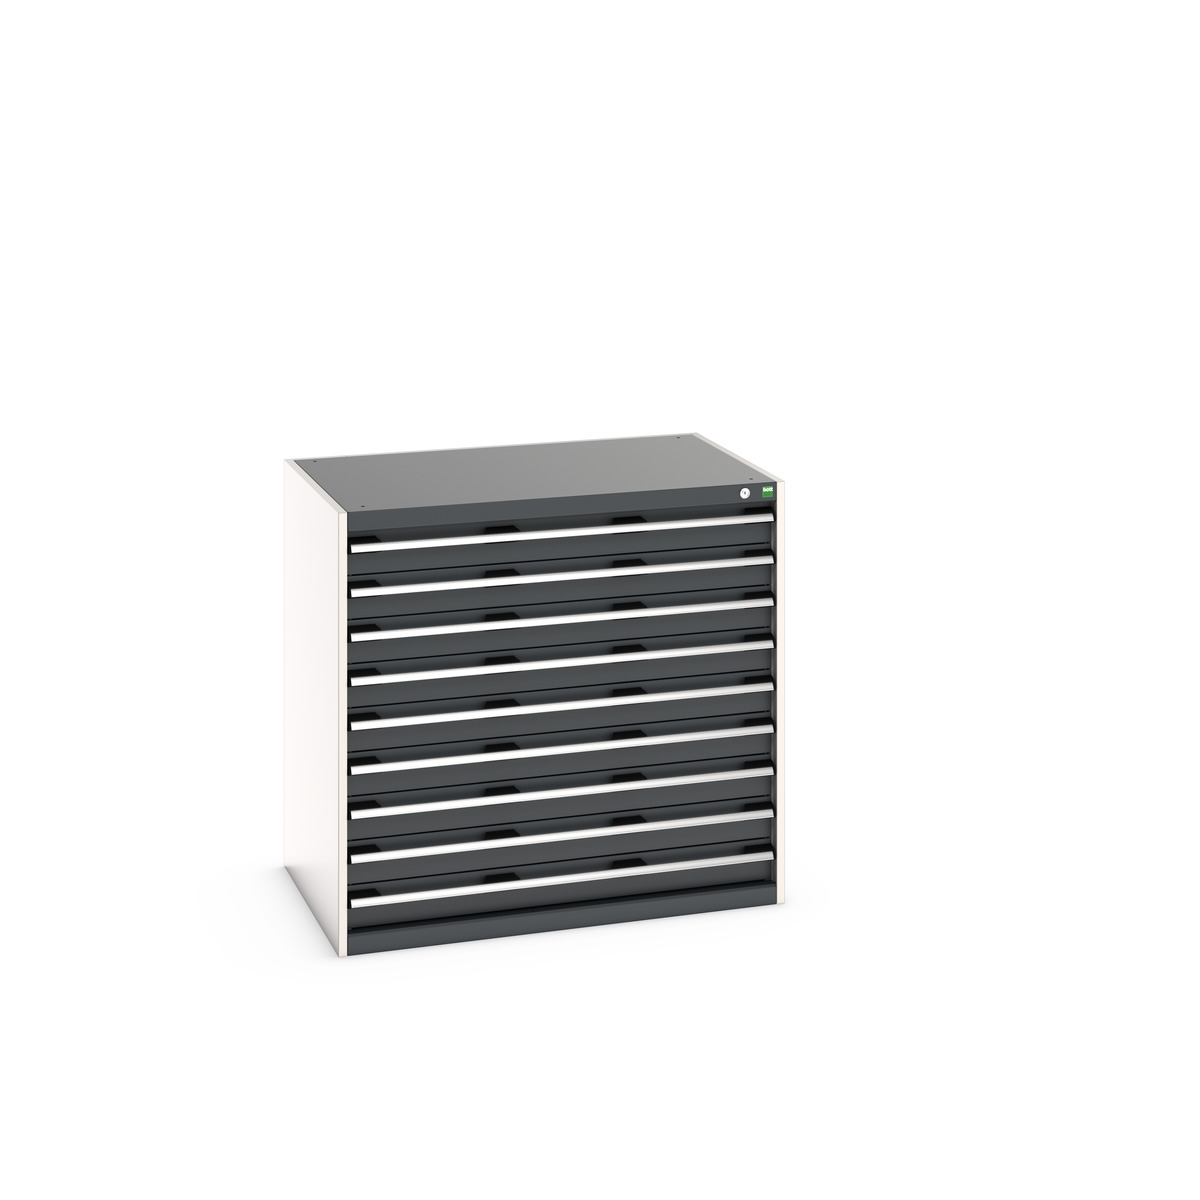 40029028. - cubio drawer cabinet